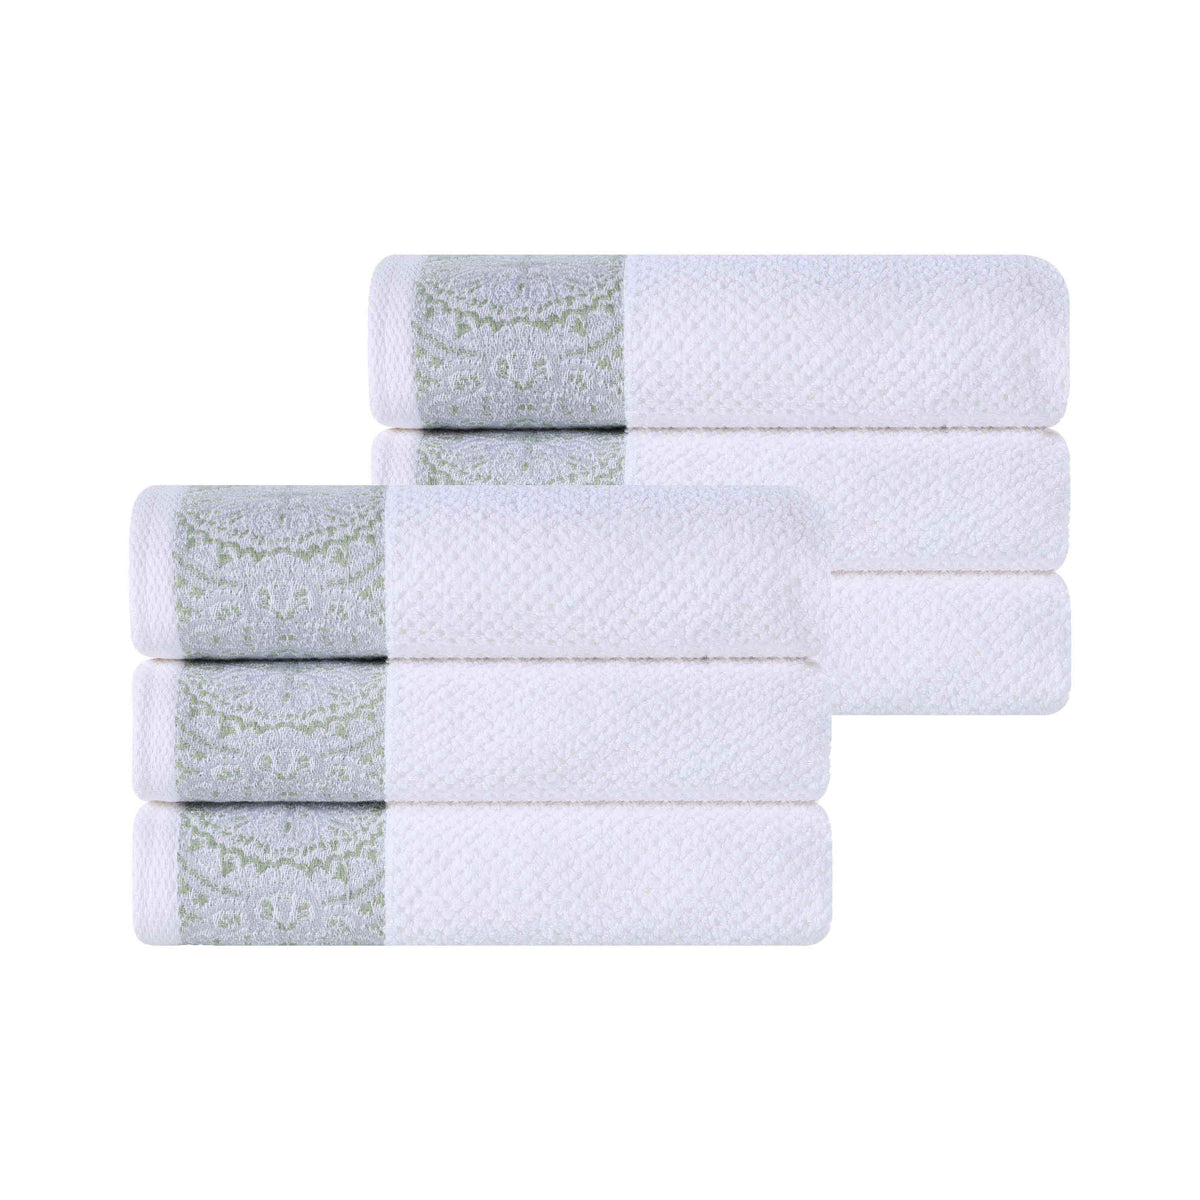 Medallion Cotton Jacquard Textured Soft Absorbent Hand Towel Set of 6